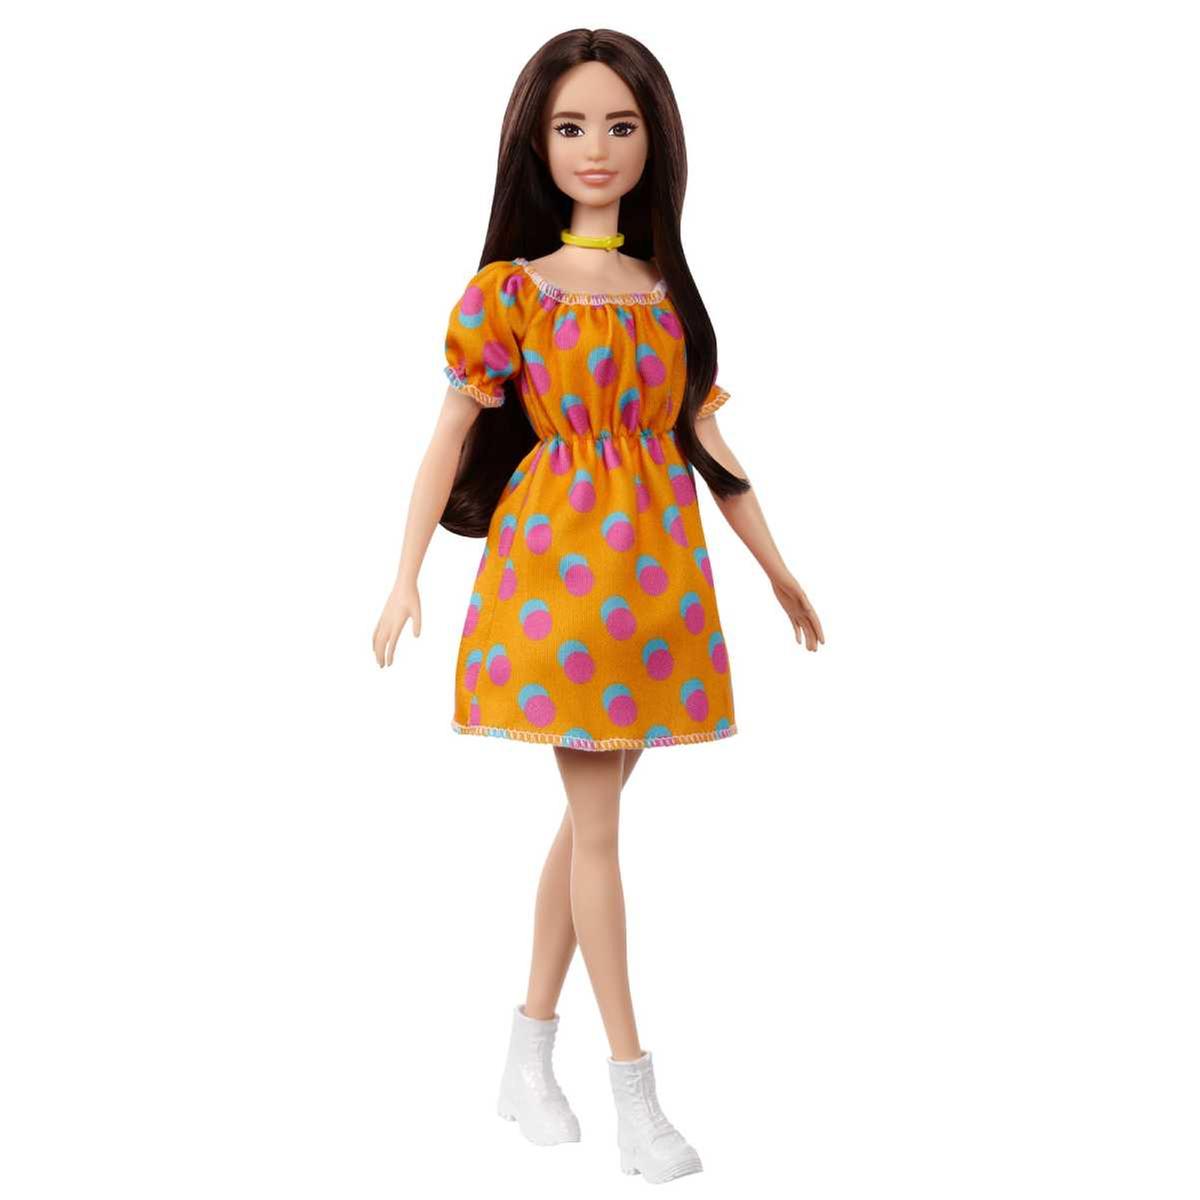 Barbie - Muñeca Fashionista - Vestido naranja sin hombros | Fashionistas |  Toys"R"Us España